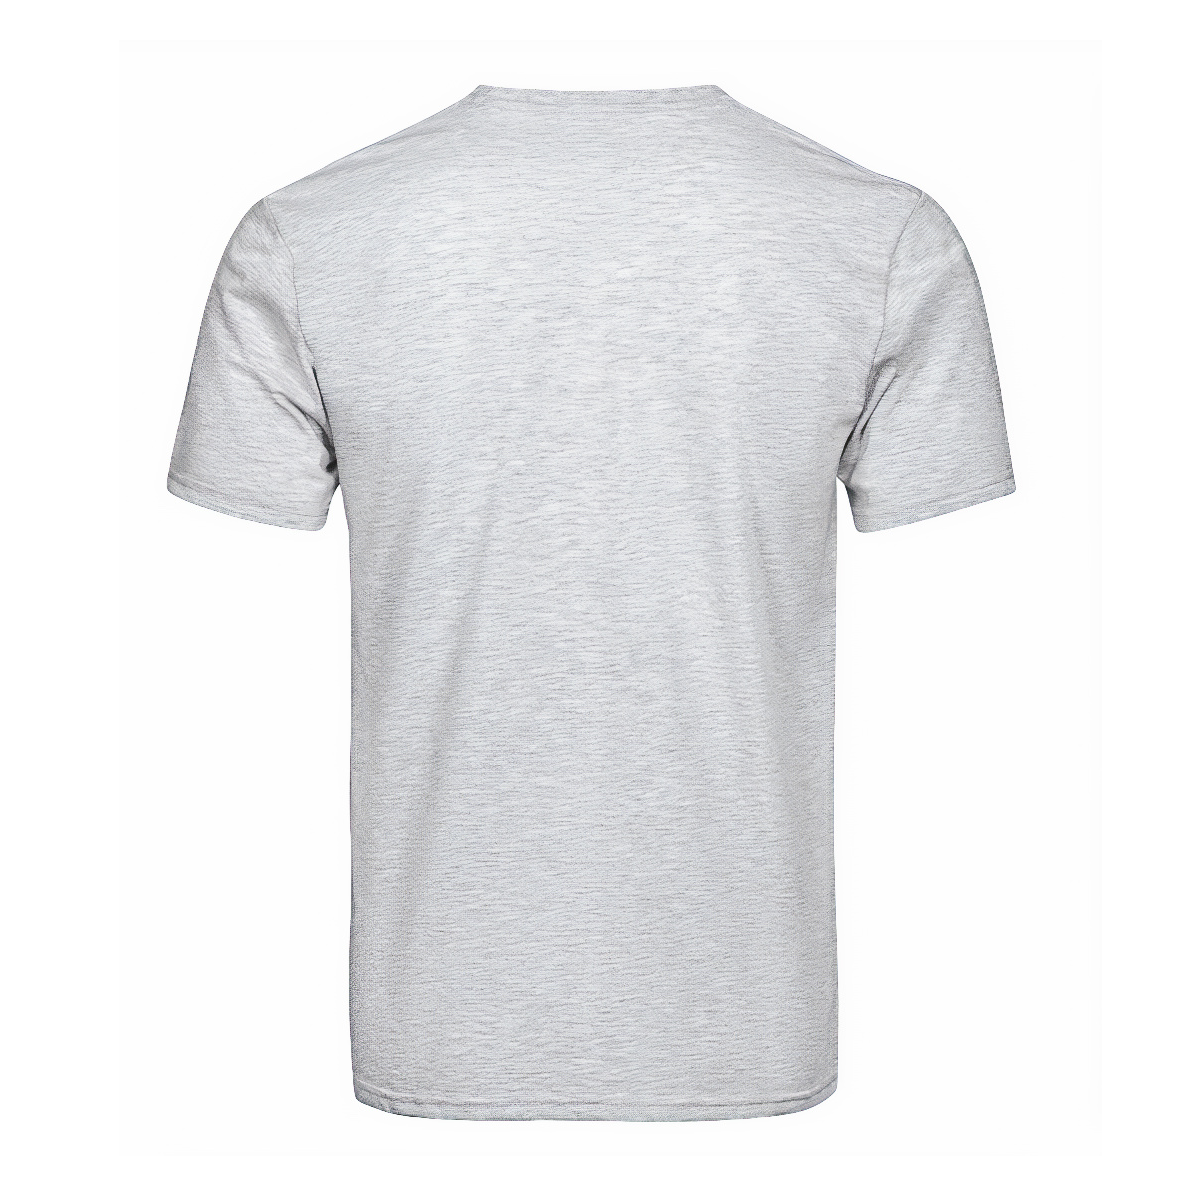 Hopkirk Tartan Crest T-shirt - I'm not yelling style